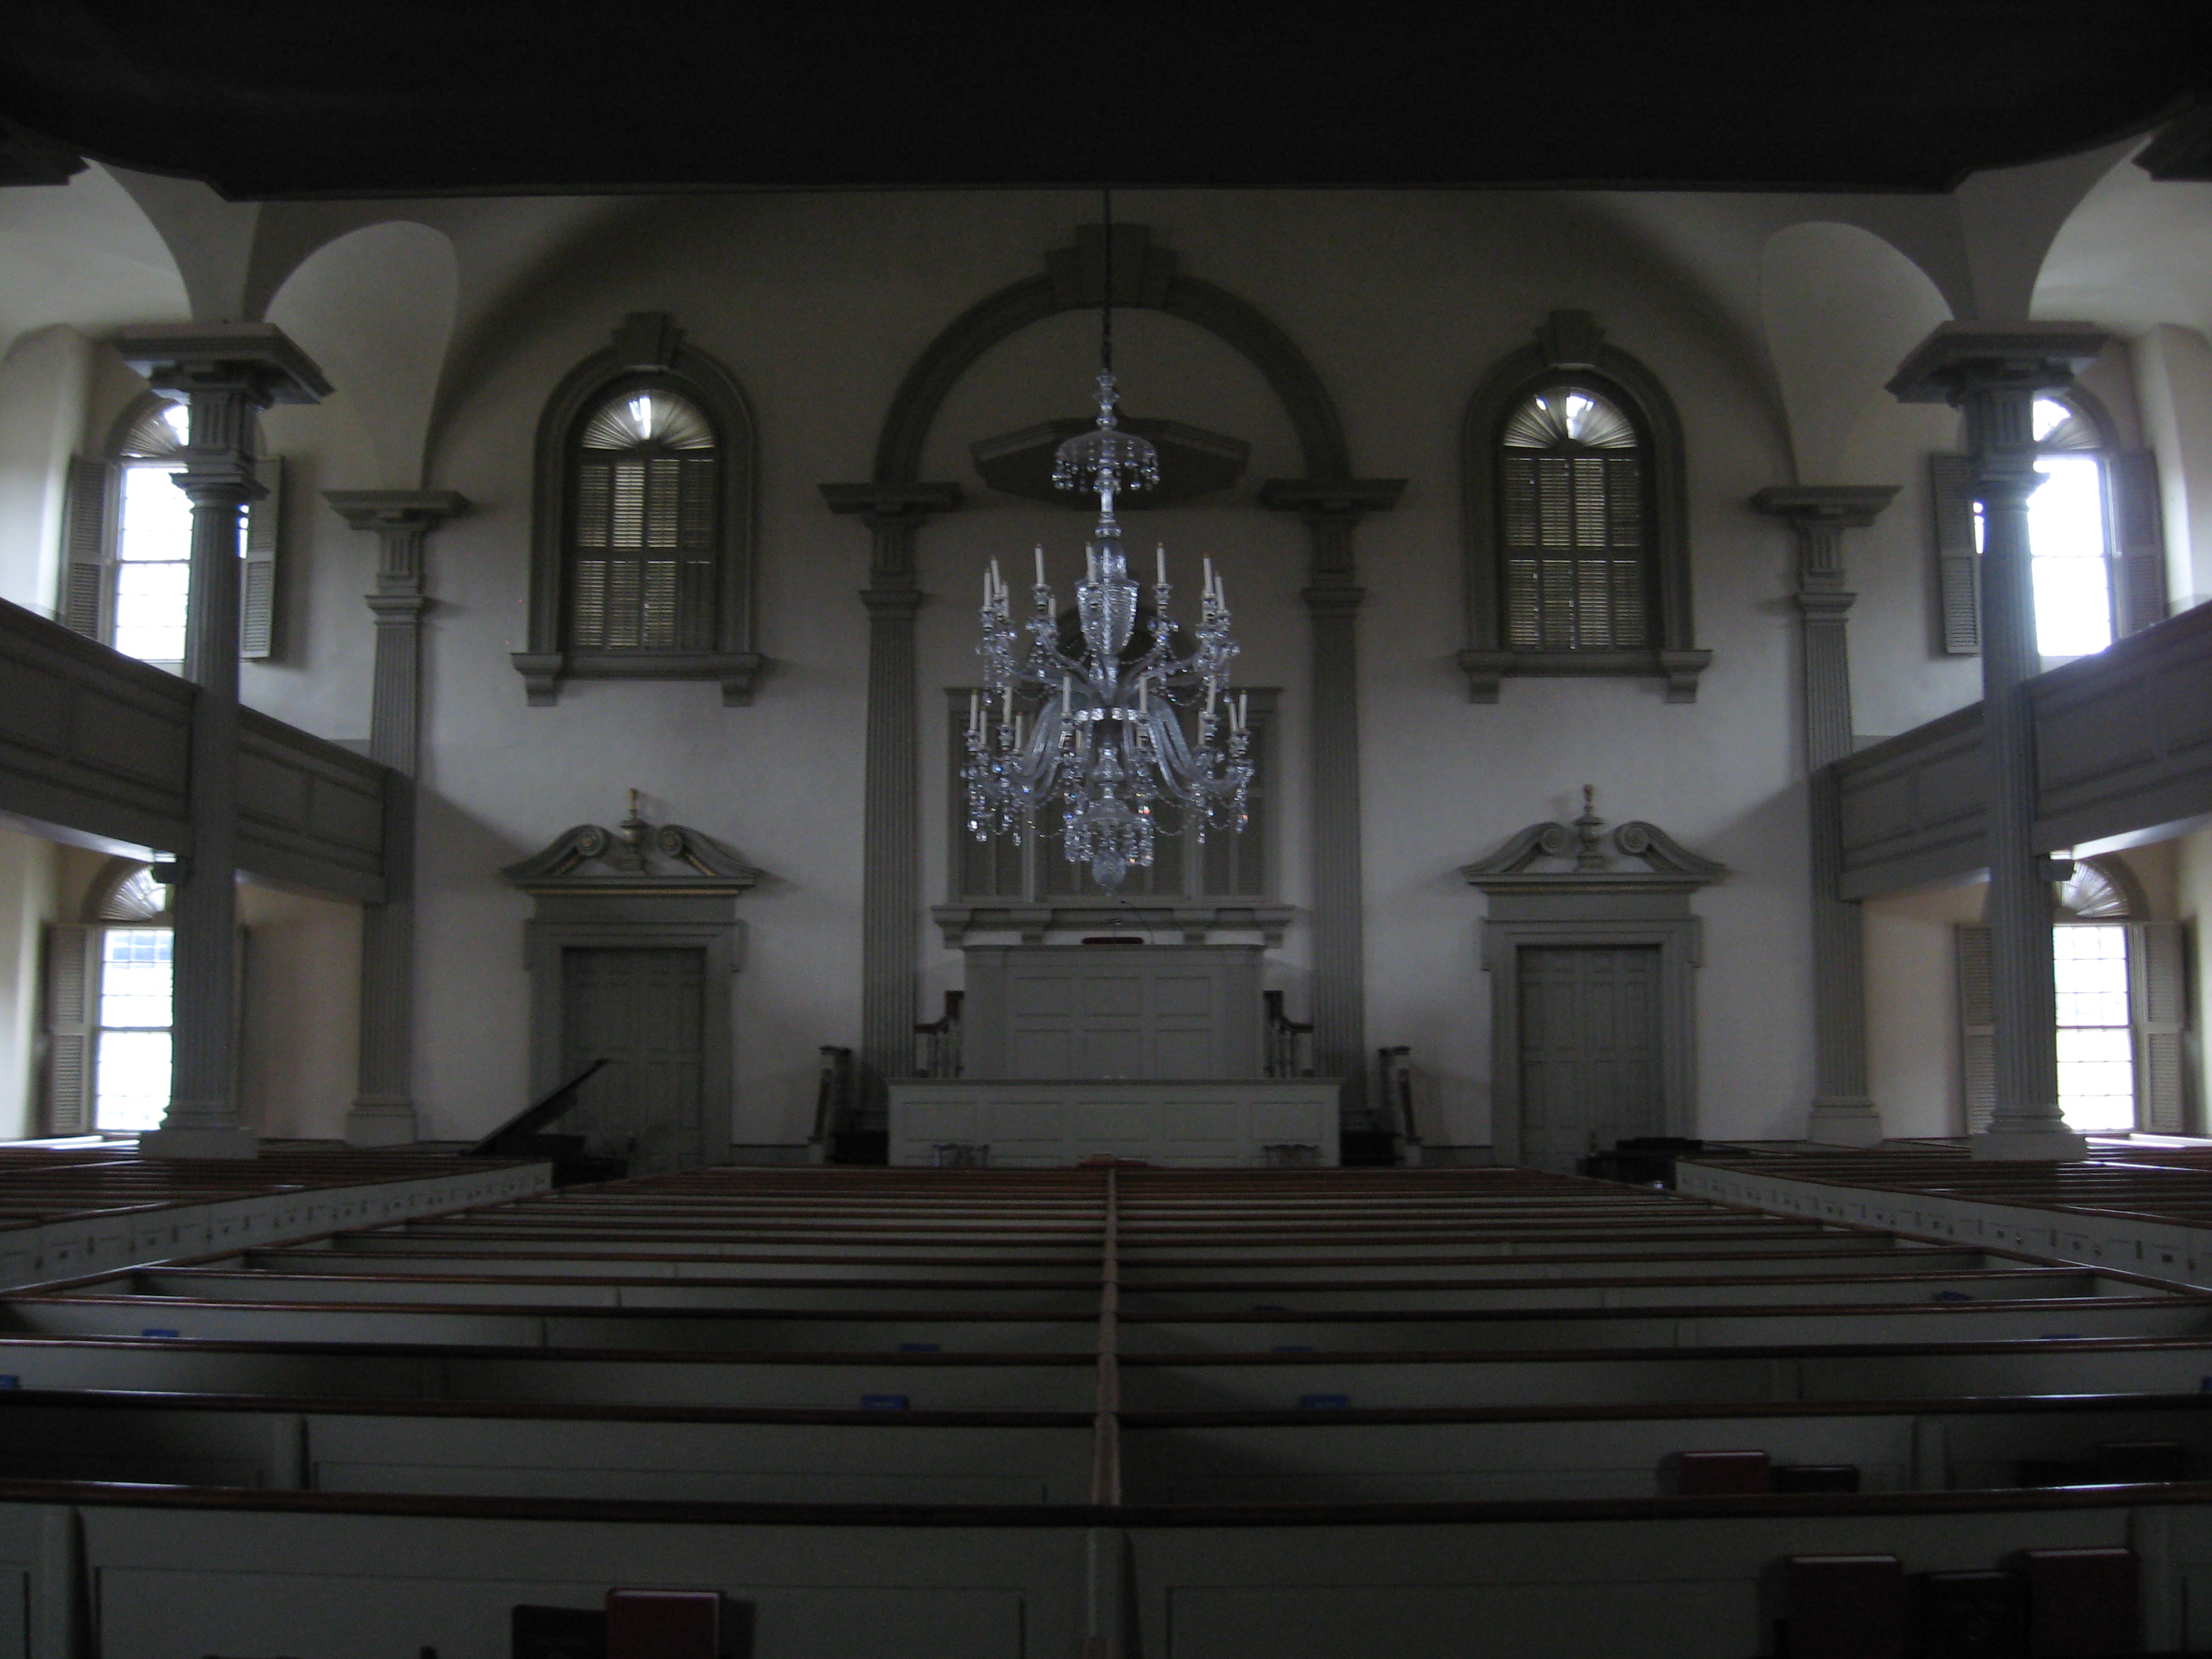 File:Inside Church.JPG - Wikipedia